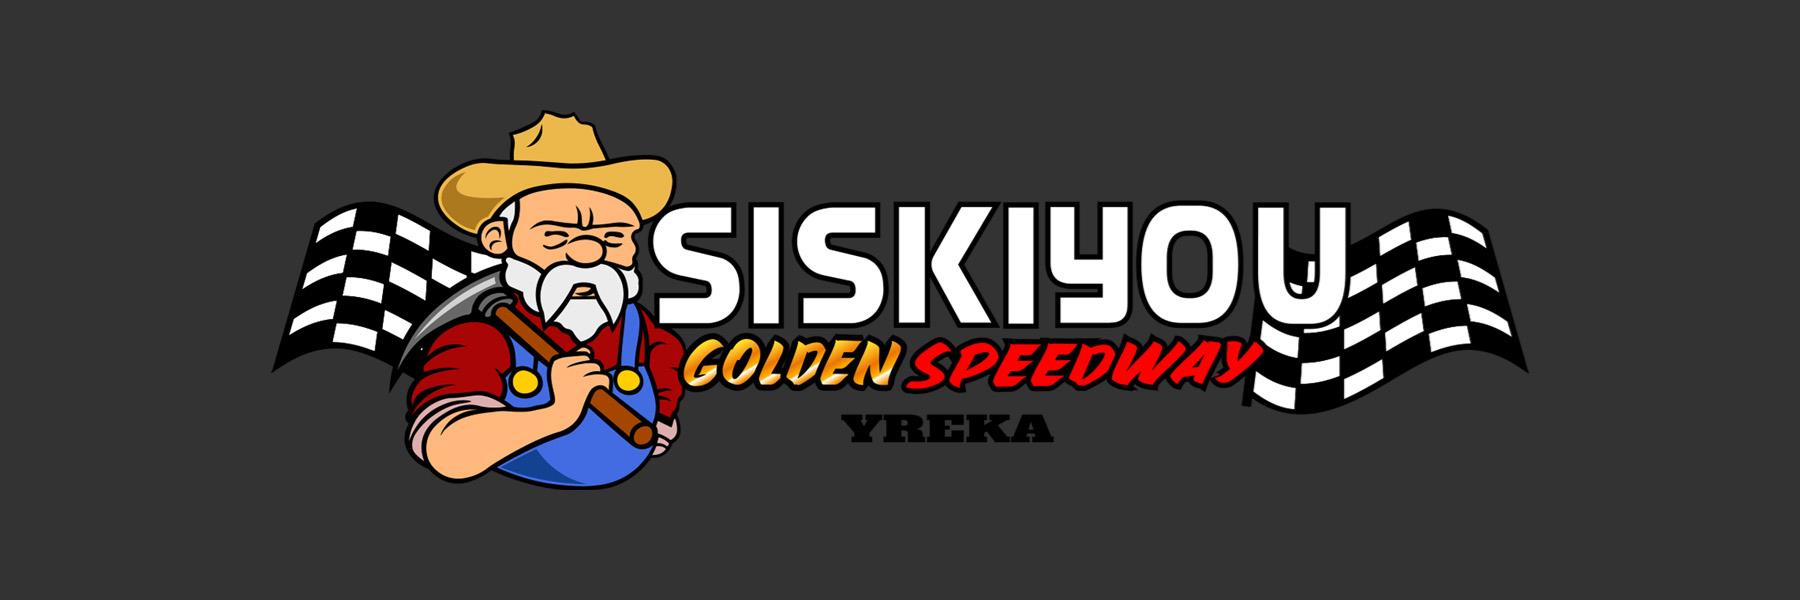 6/20/2020 - Siskiyou Golden Speedway